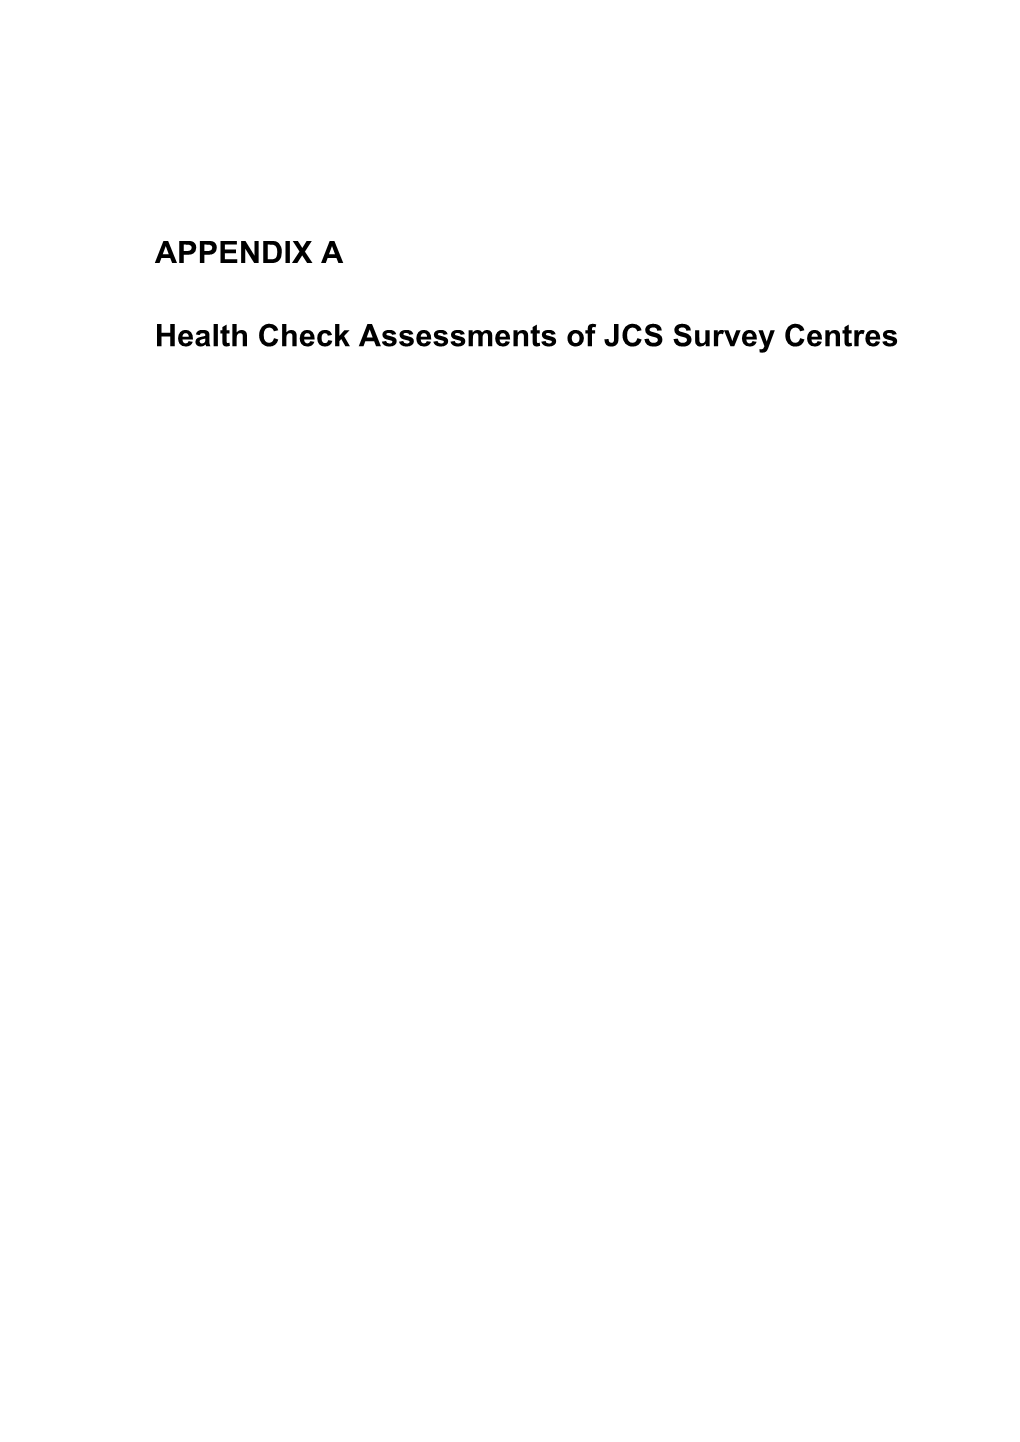 APPENDIX a Health Check Assessments of JCS Survey Centres